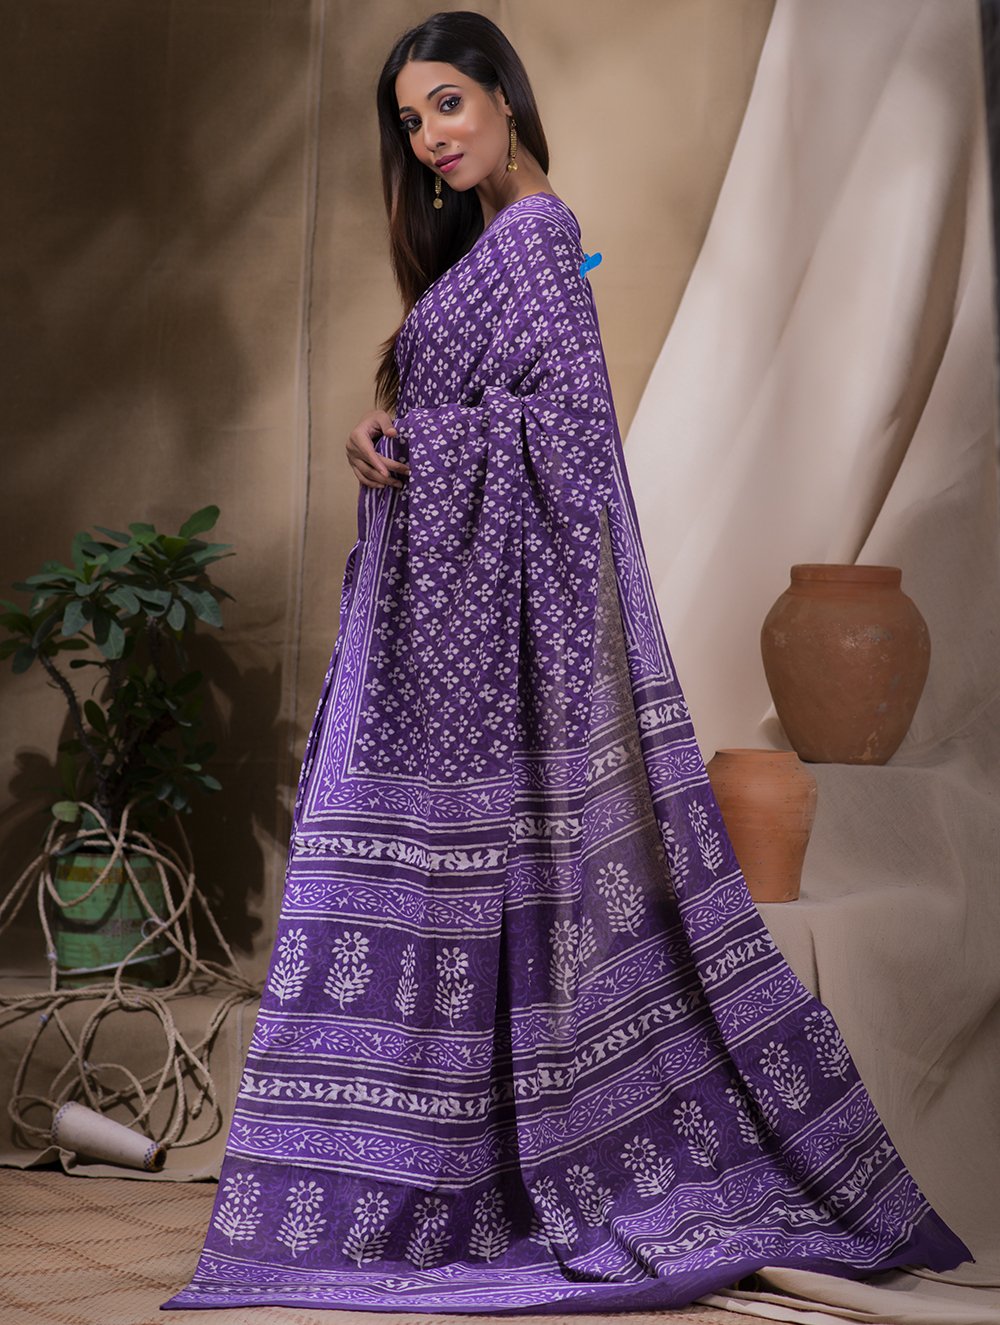 Load image into Gallery viewer, Bagru Block Printed Mul Cotton Saree - Purple &amp; White